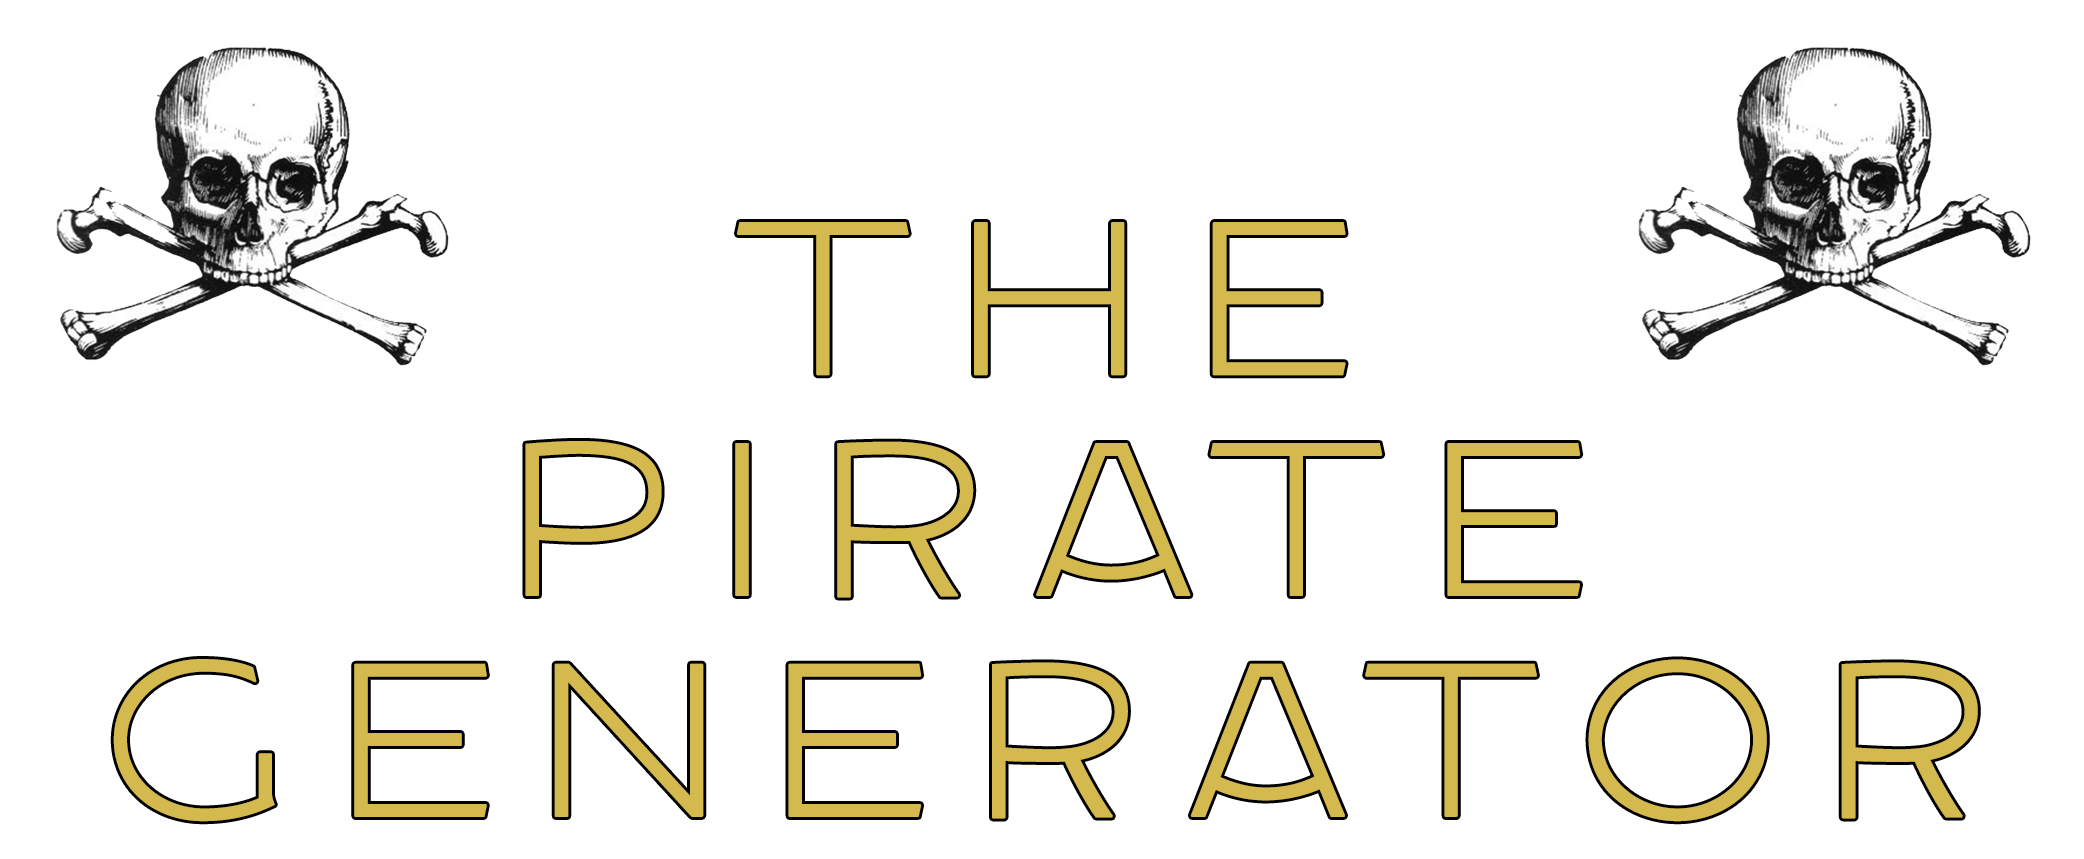 The Pirate Generator